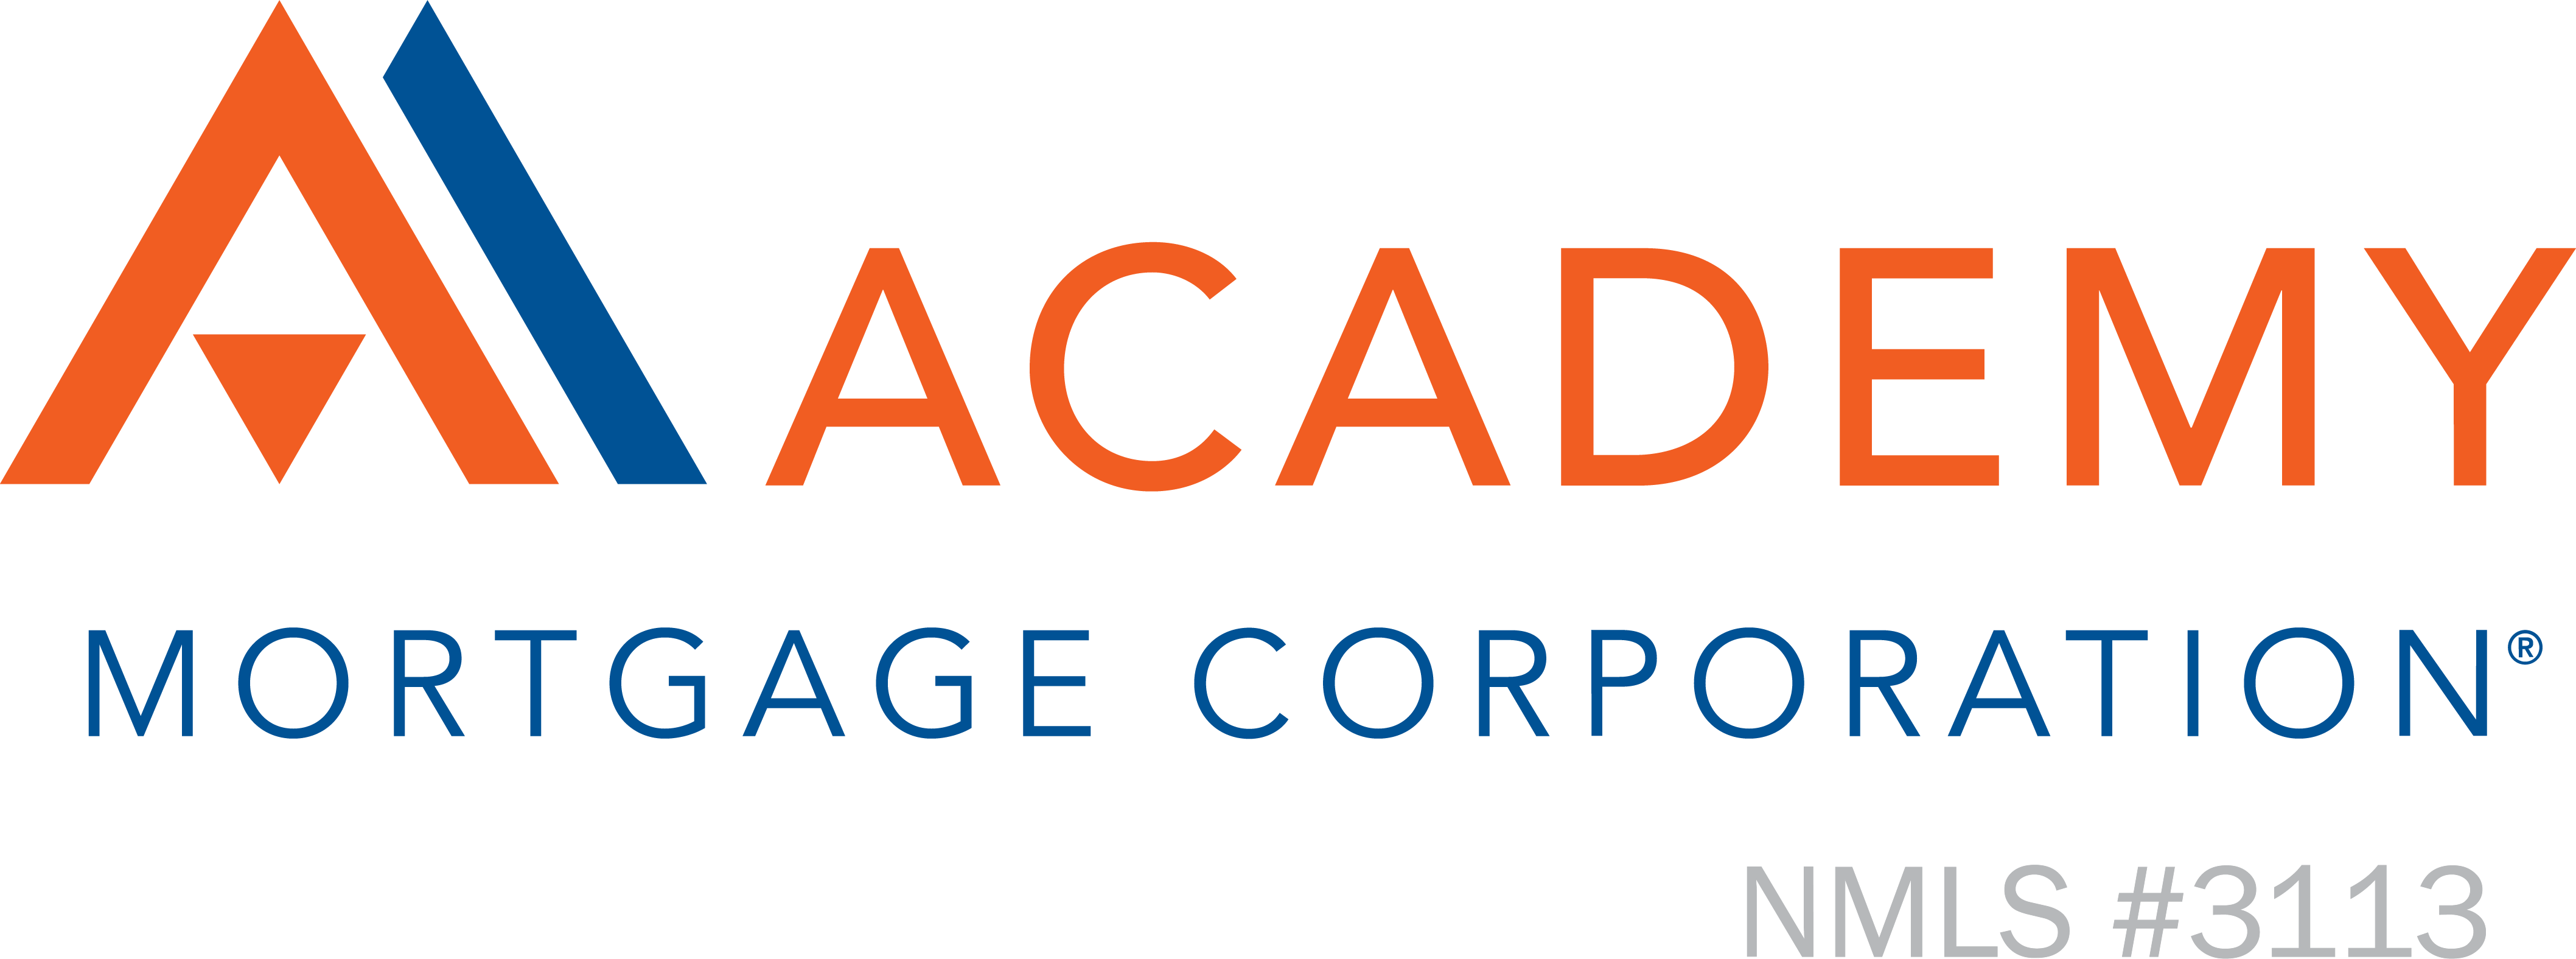 faq-academy-mortgage